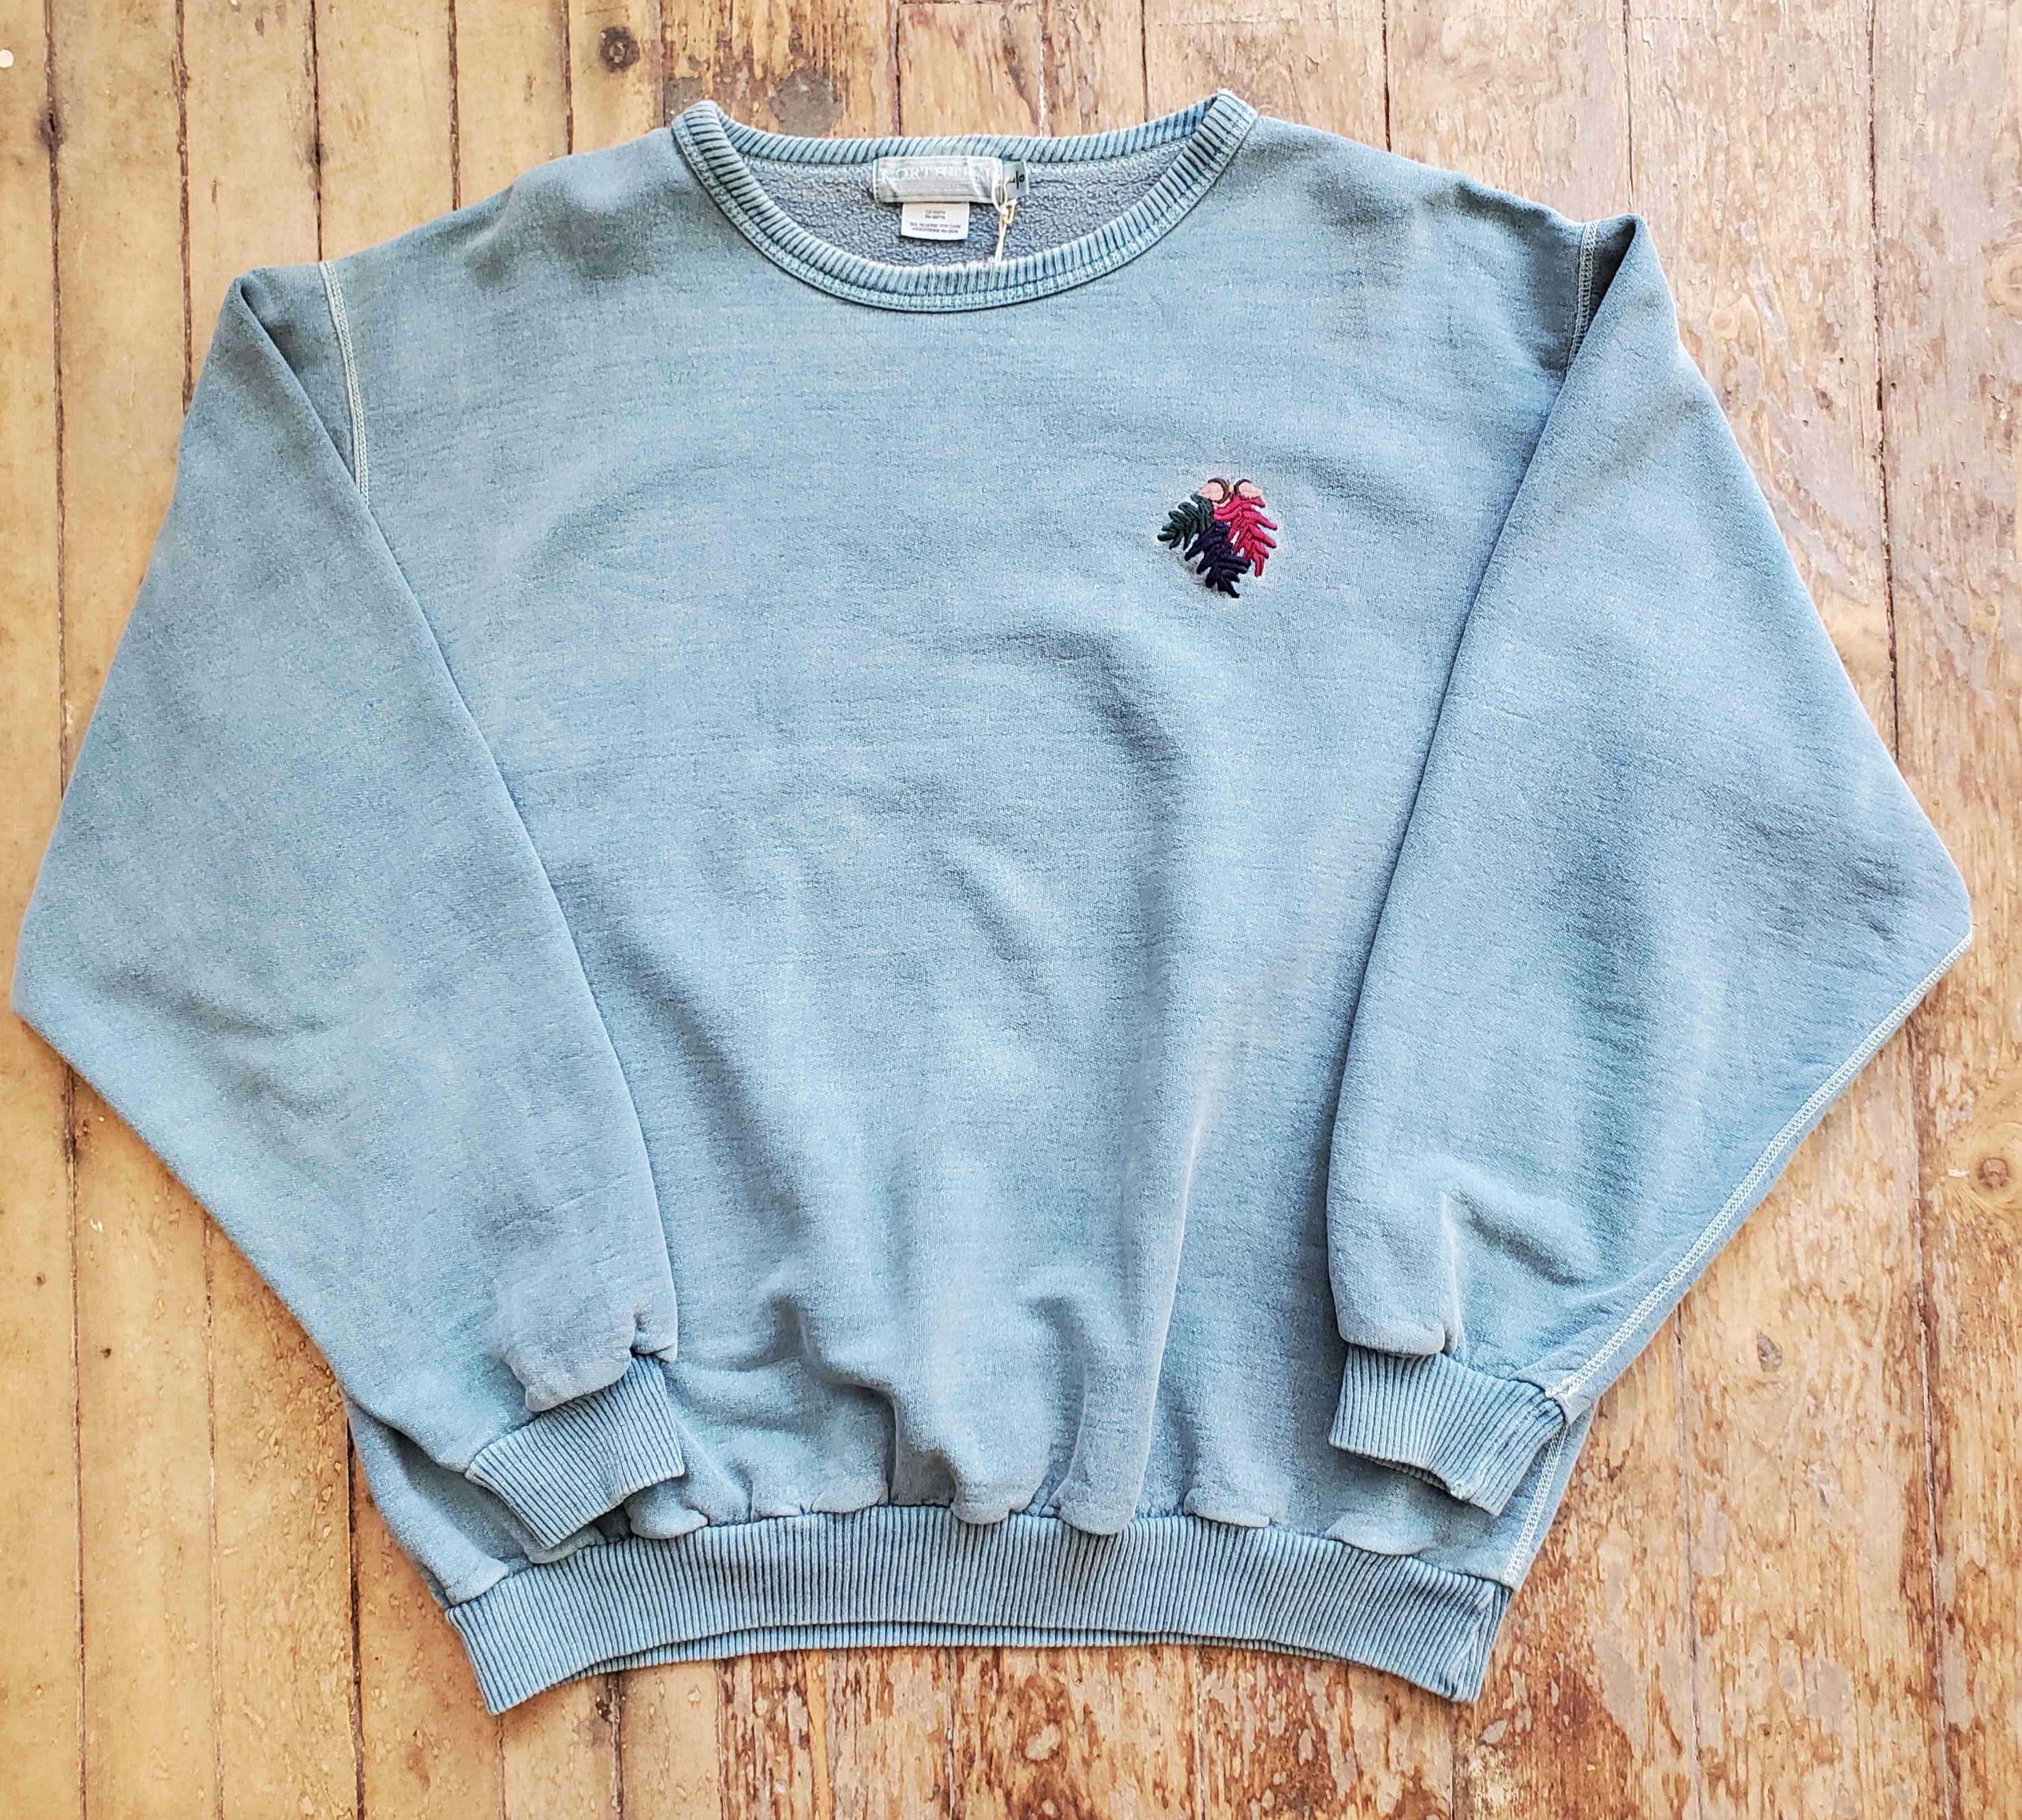 1990’s Leaf Themed Sweatshirt